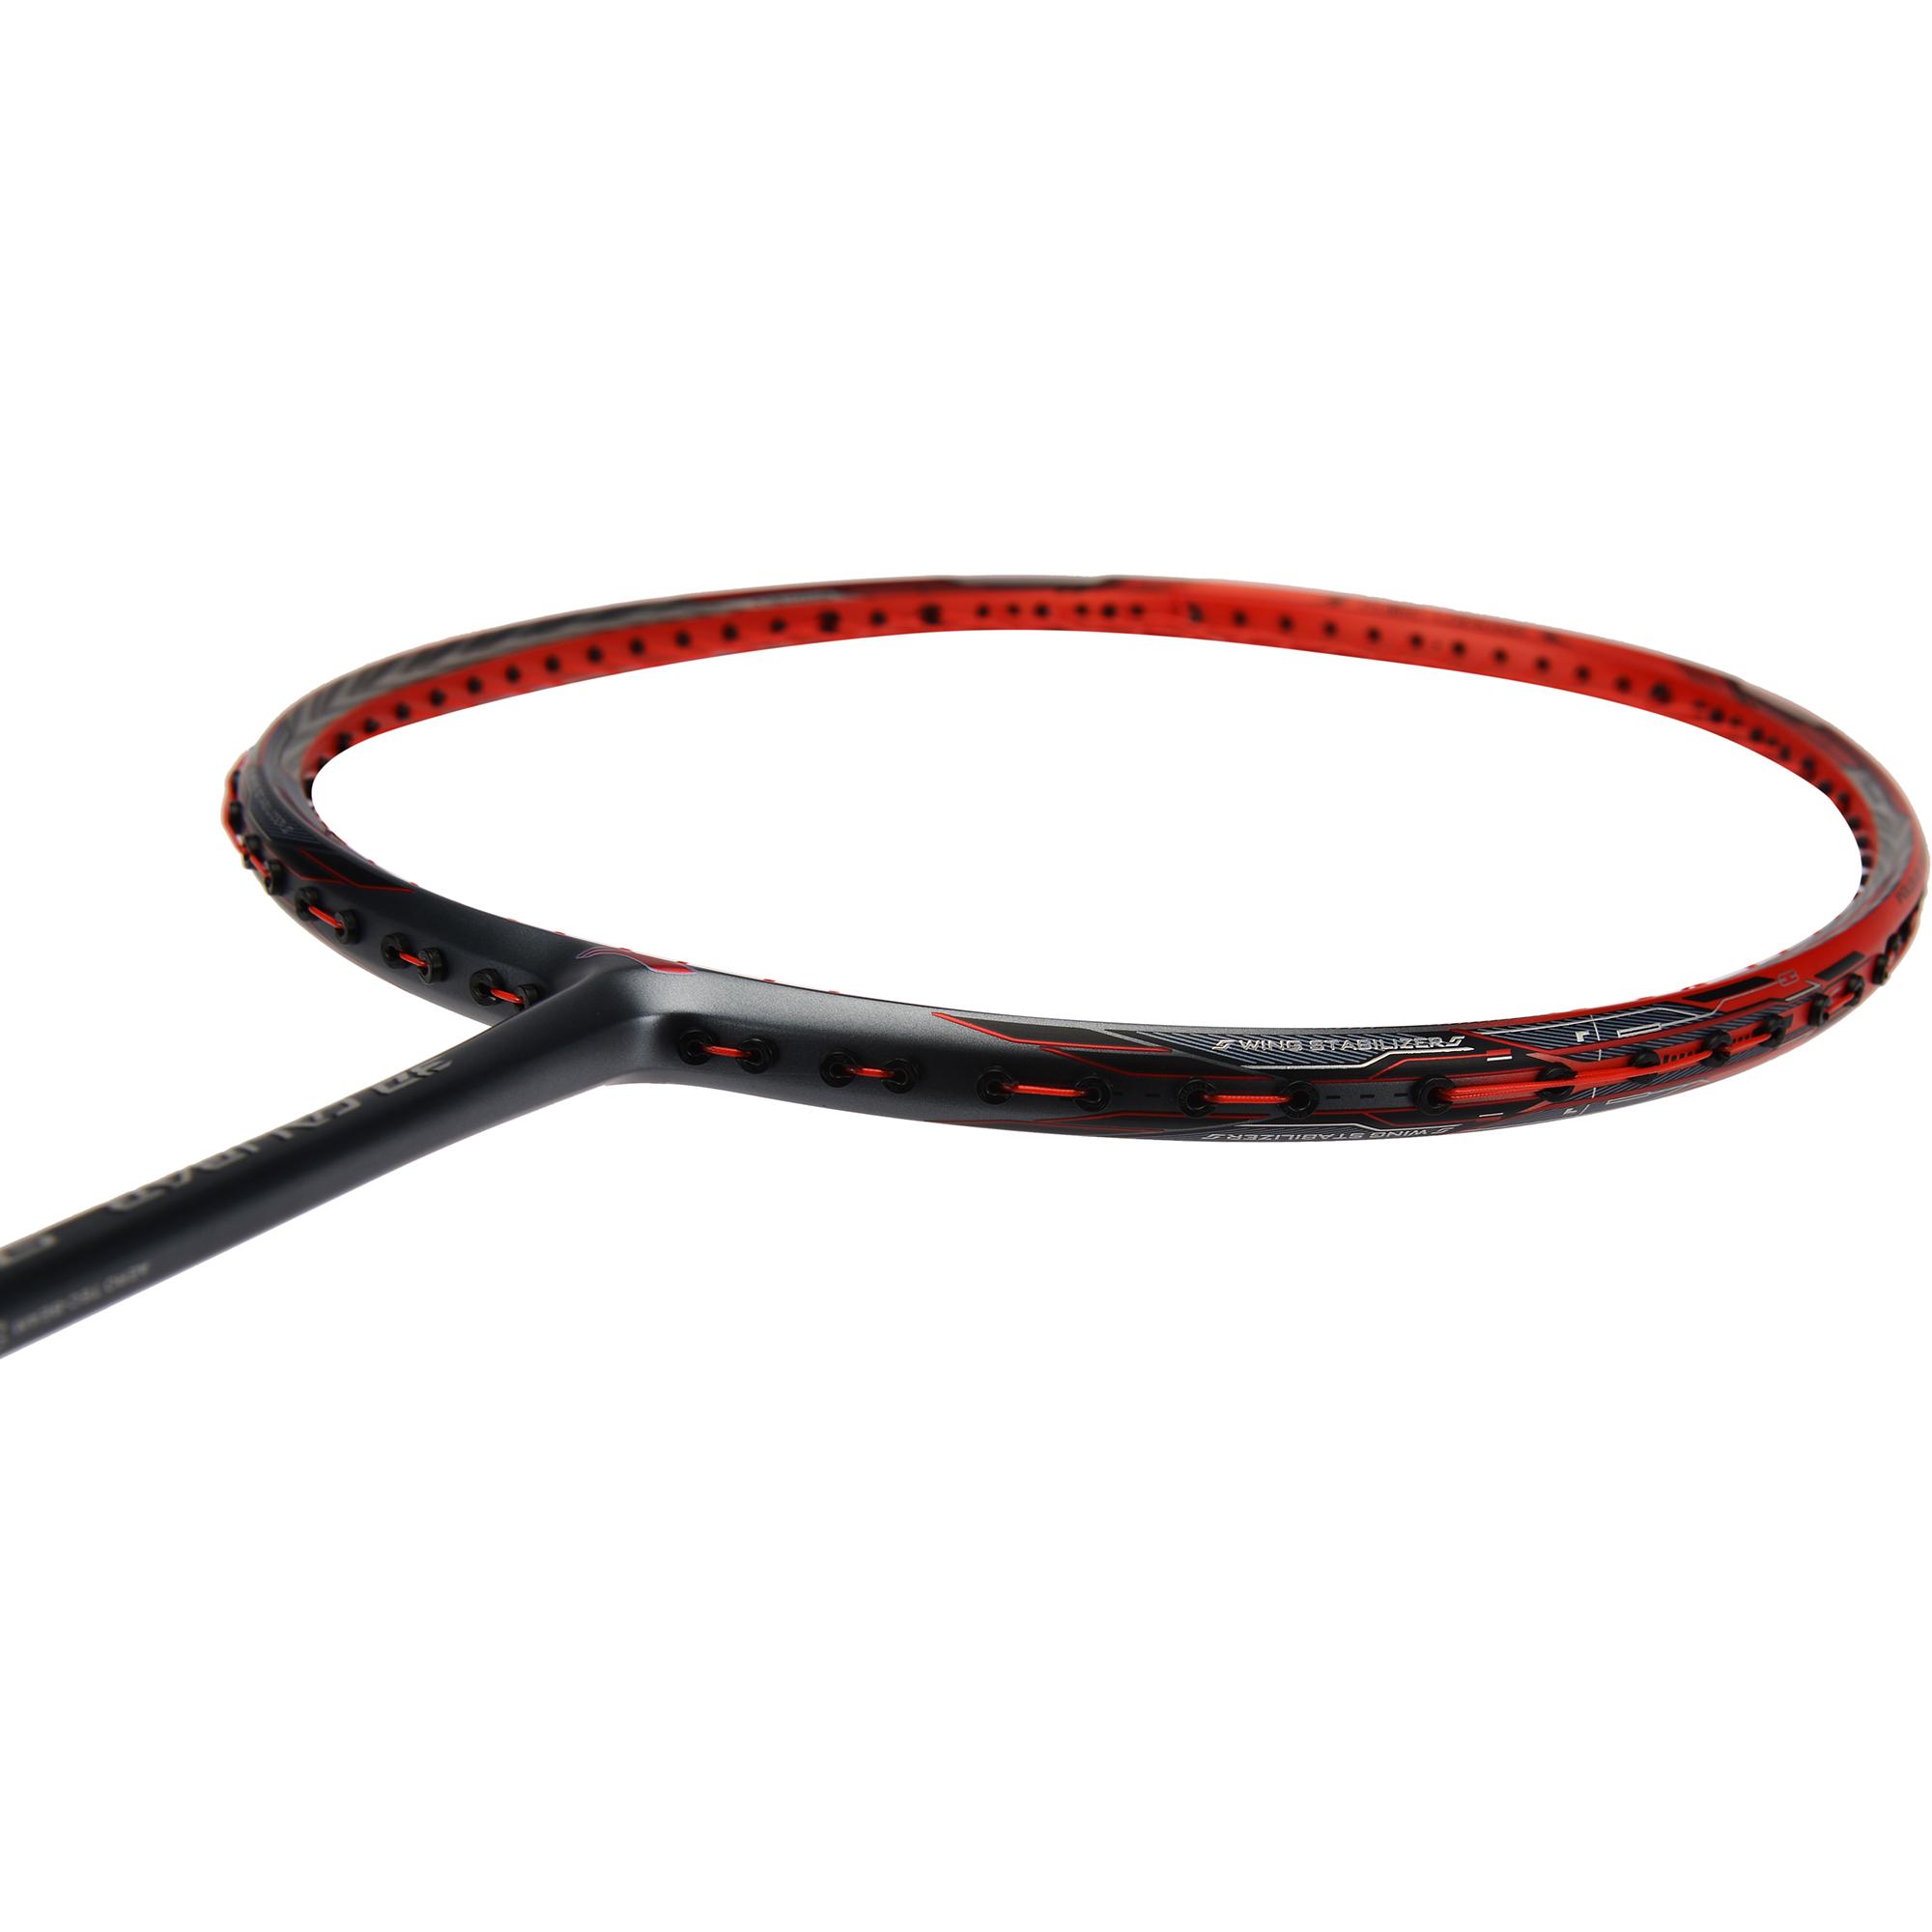 Li-Ning 3D Calibar 900B Badminton Racket [Frame Only] - Tennisnuts.com